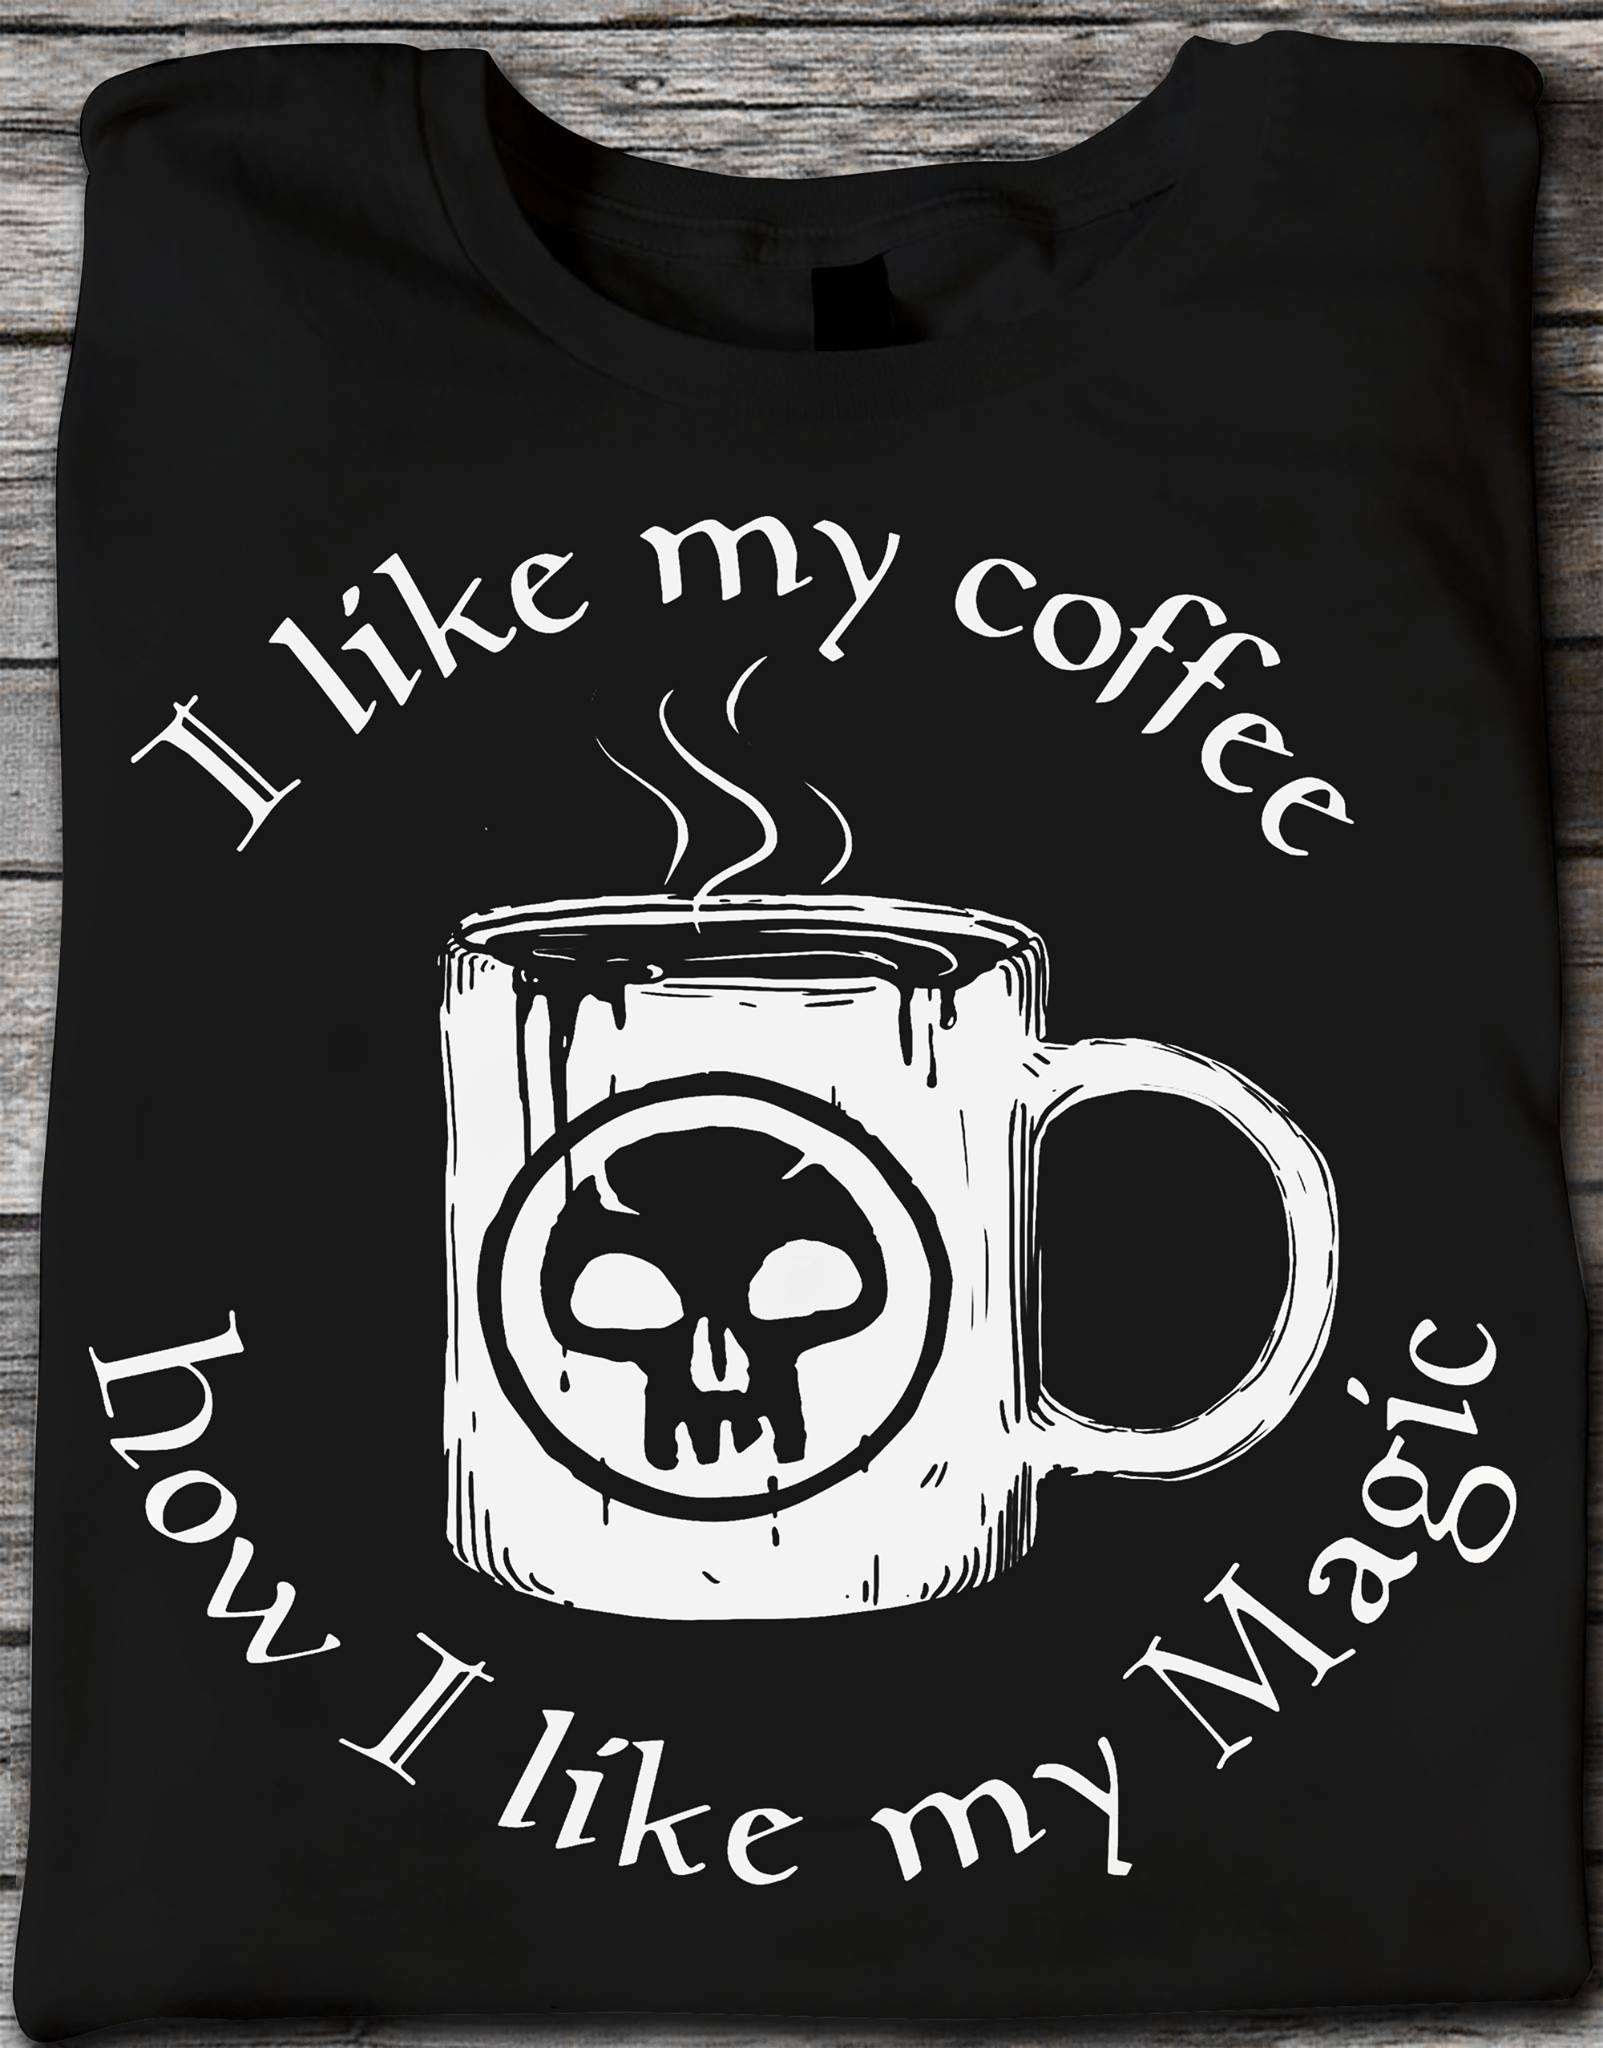 Magic Cup Coffee - I like my coffee how i like my magic